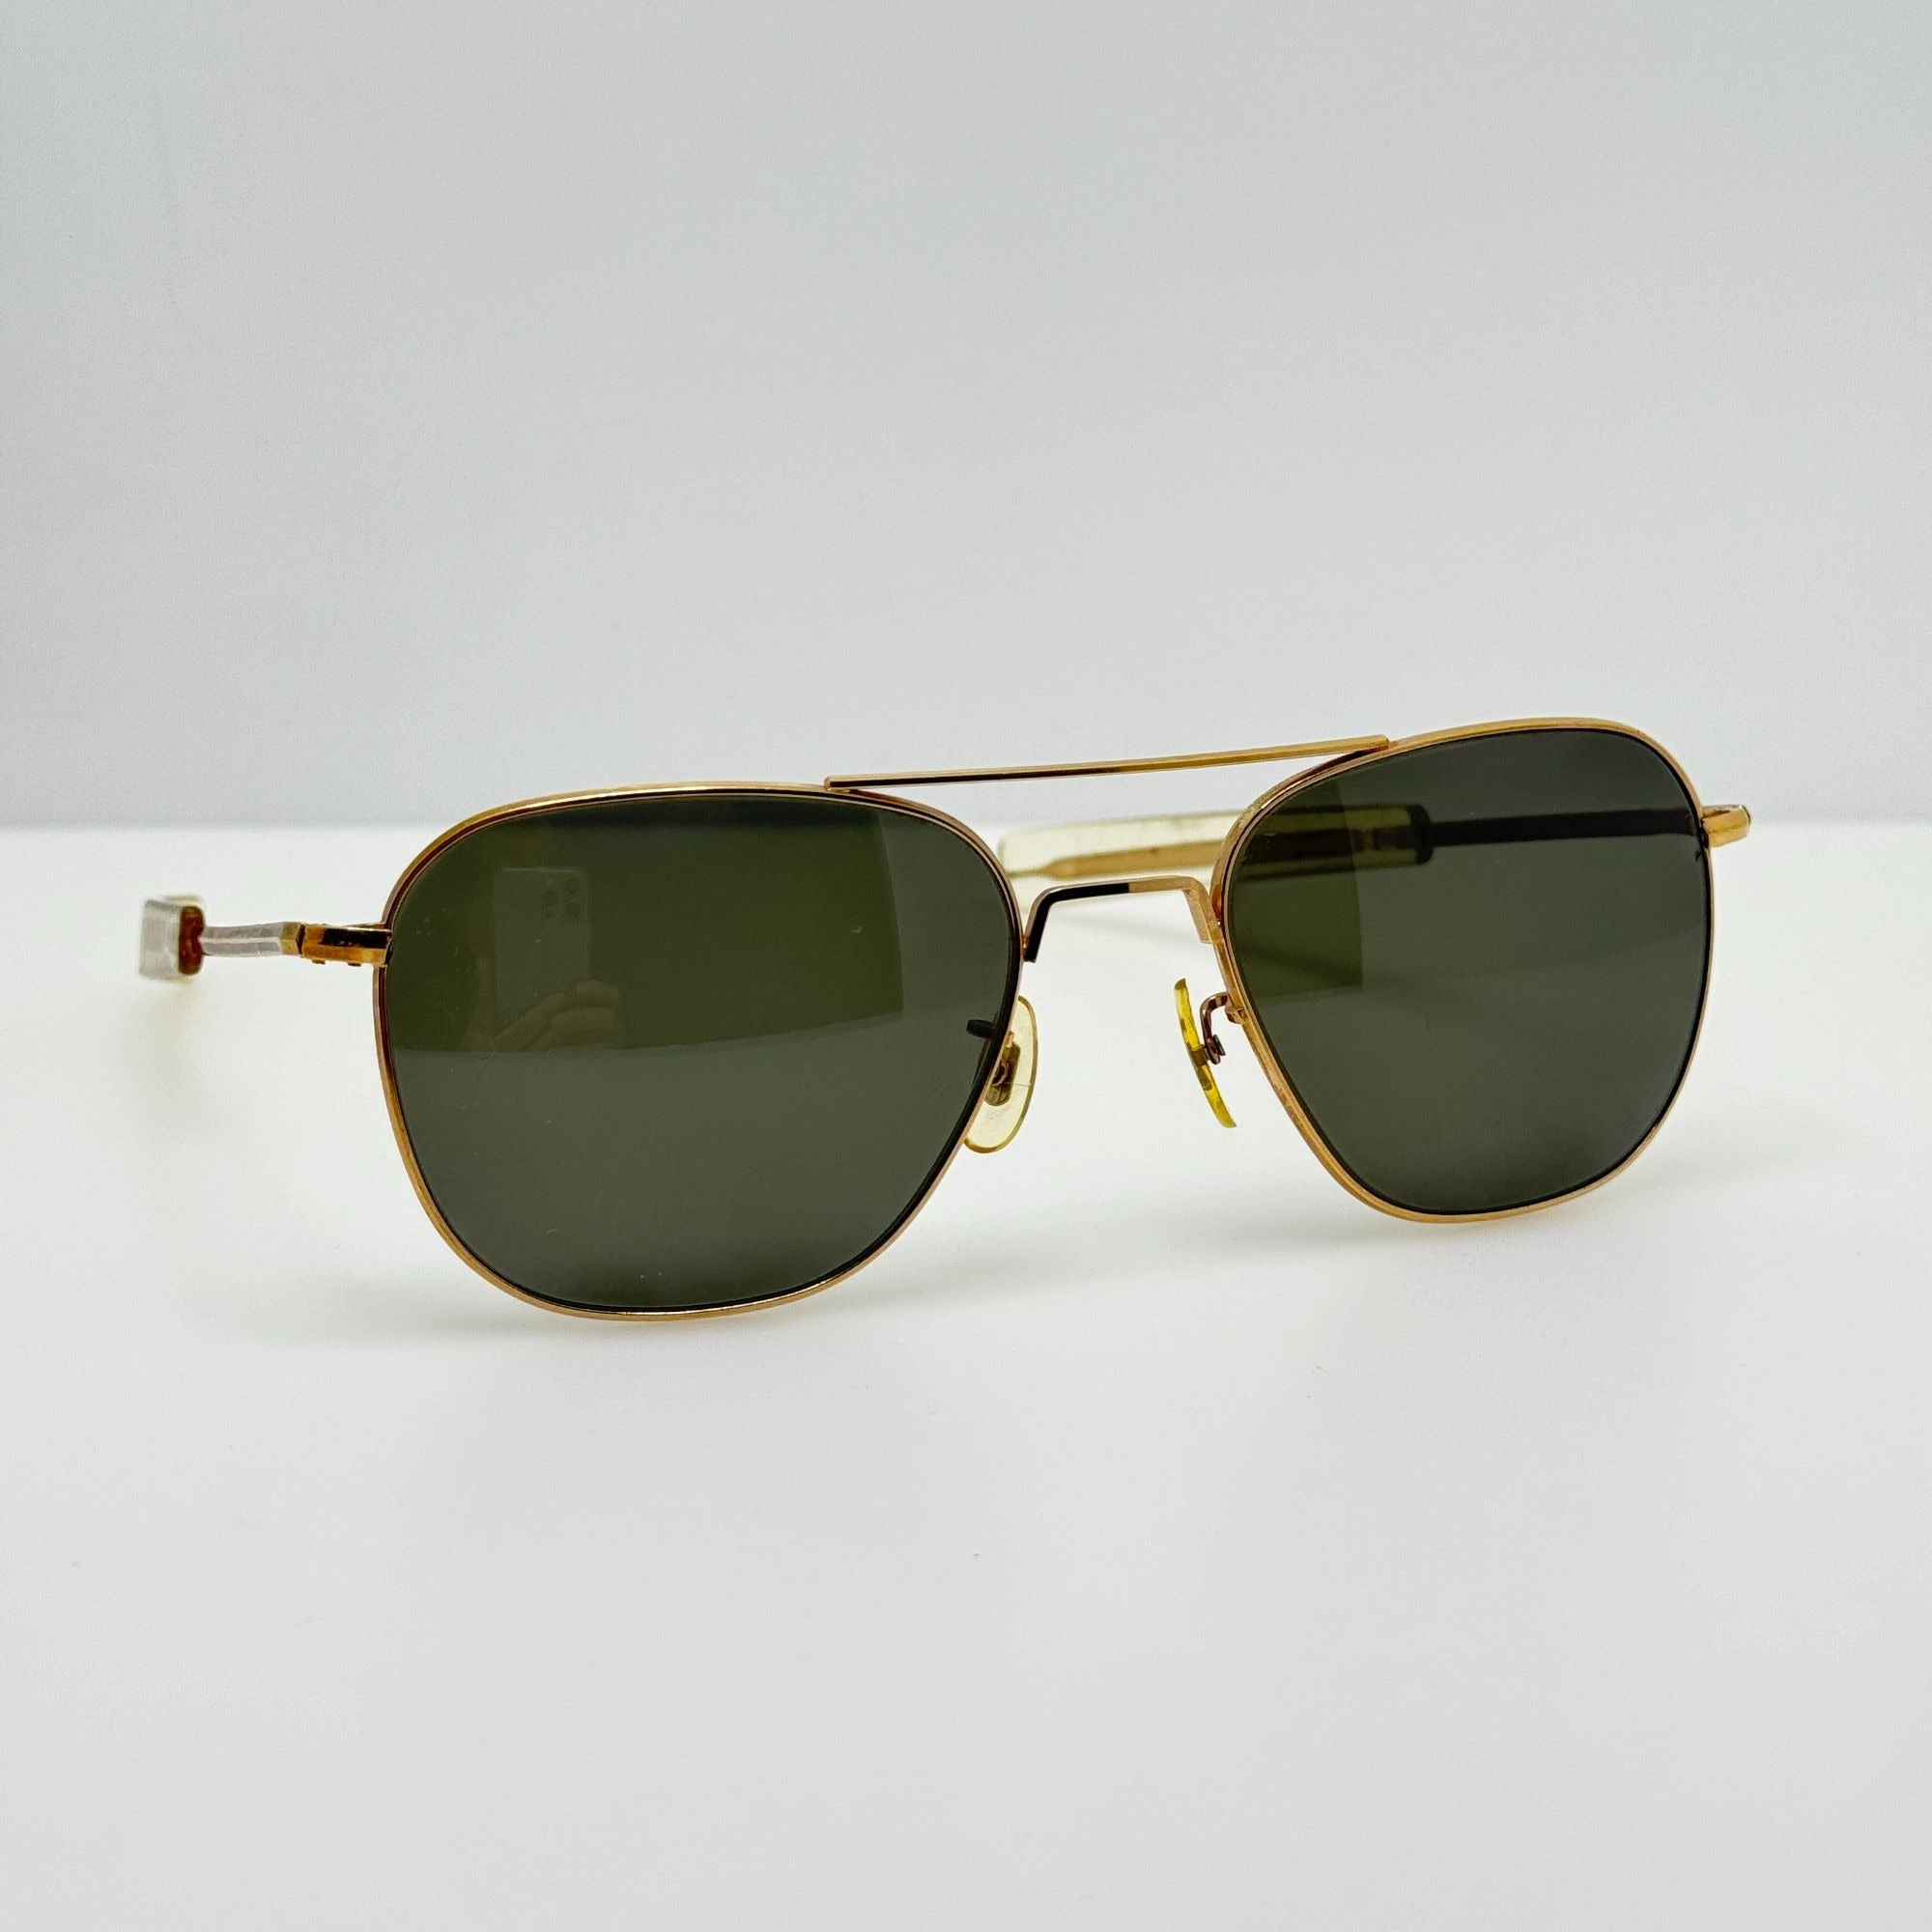 American-Optical-Sunglasses-Pilot-Command-5-1/2-AO-USA-Sunglasses